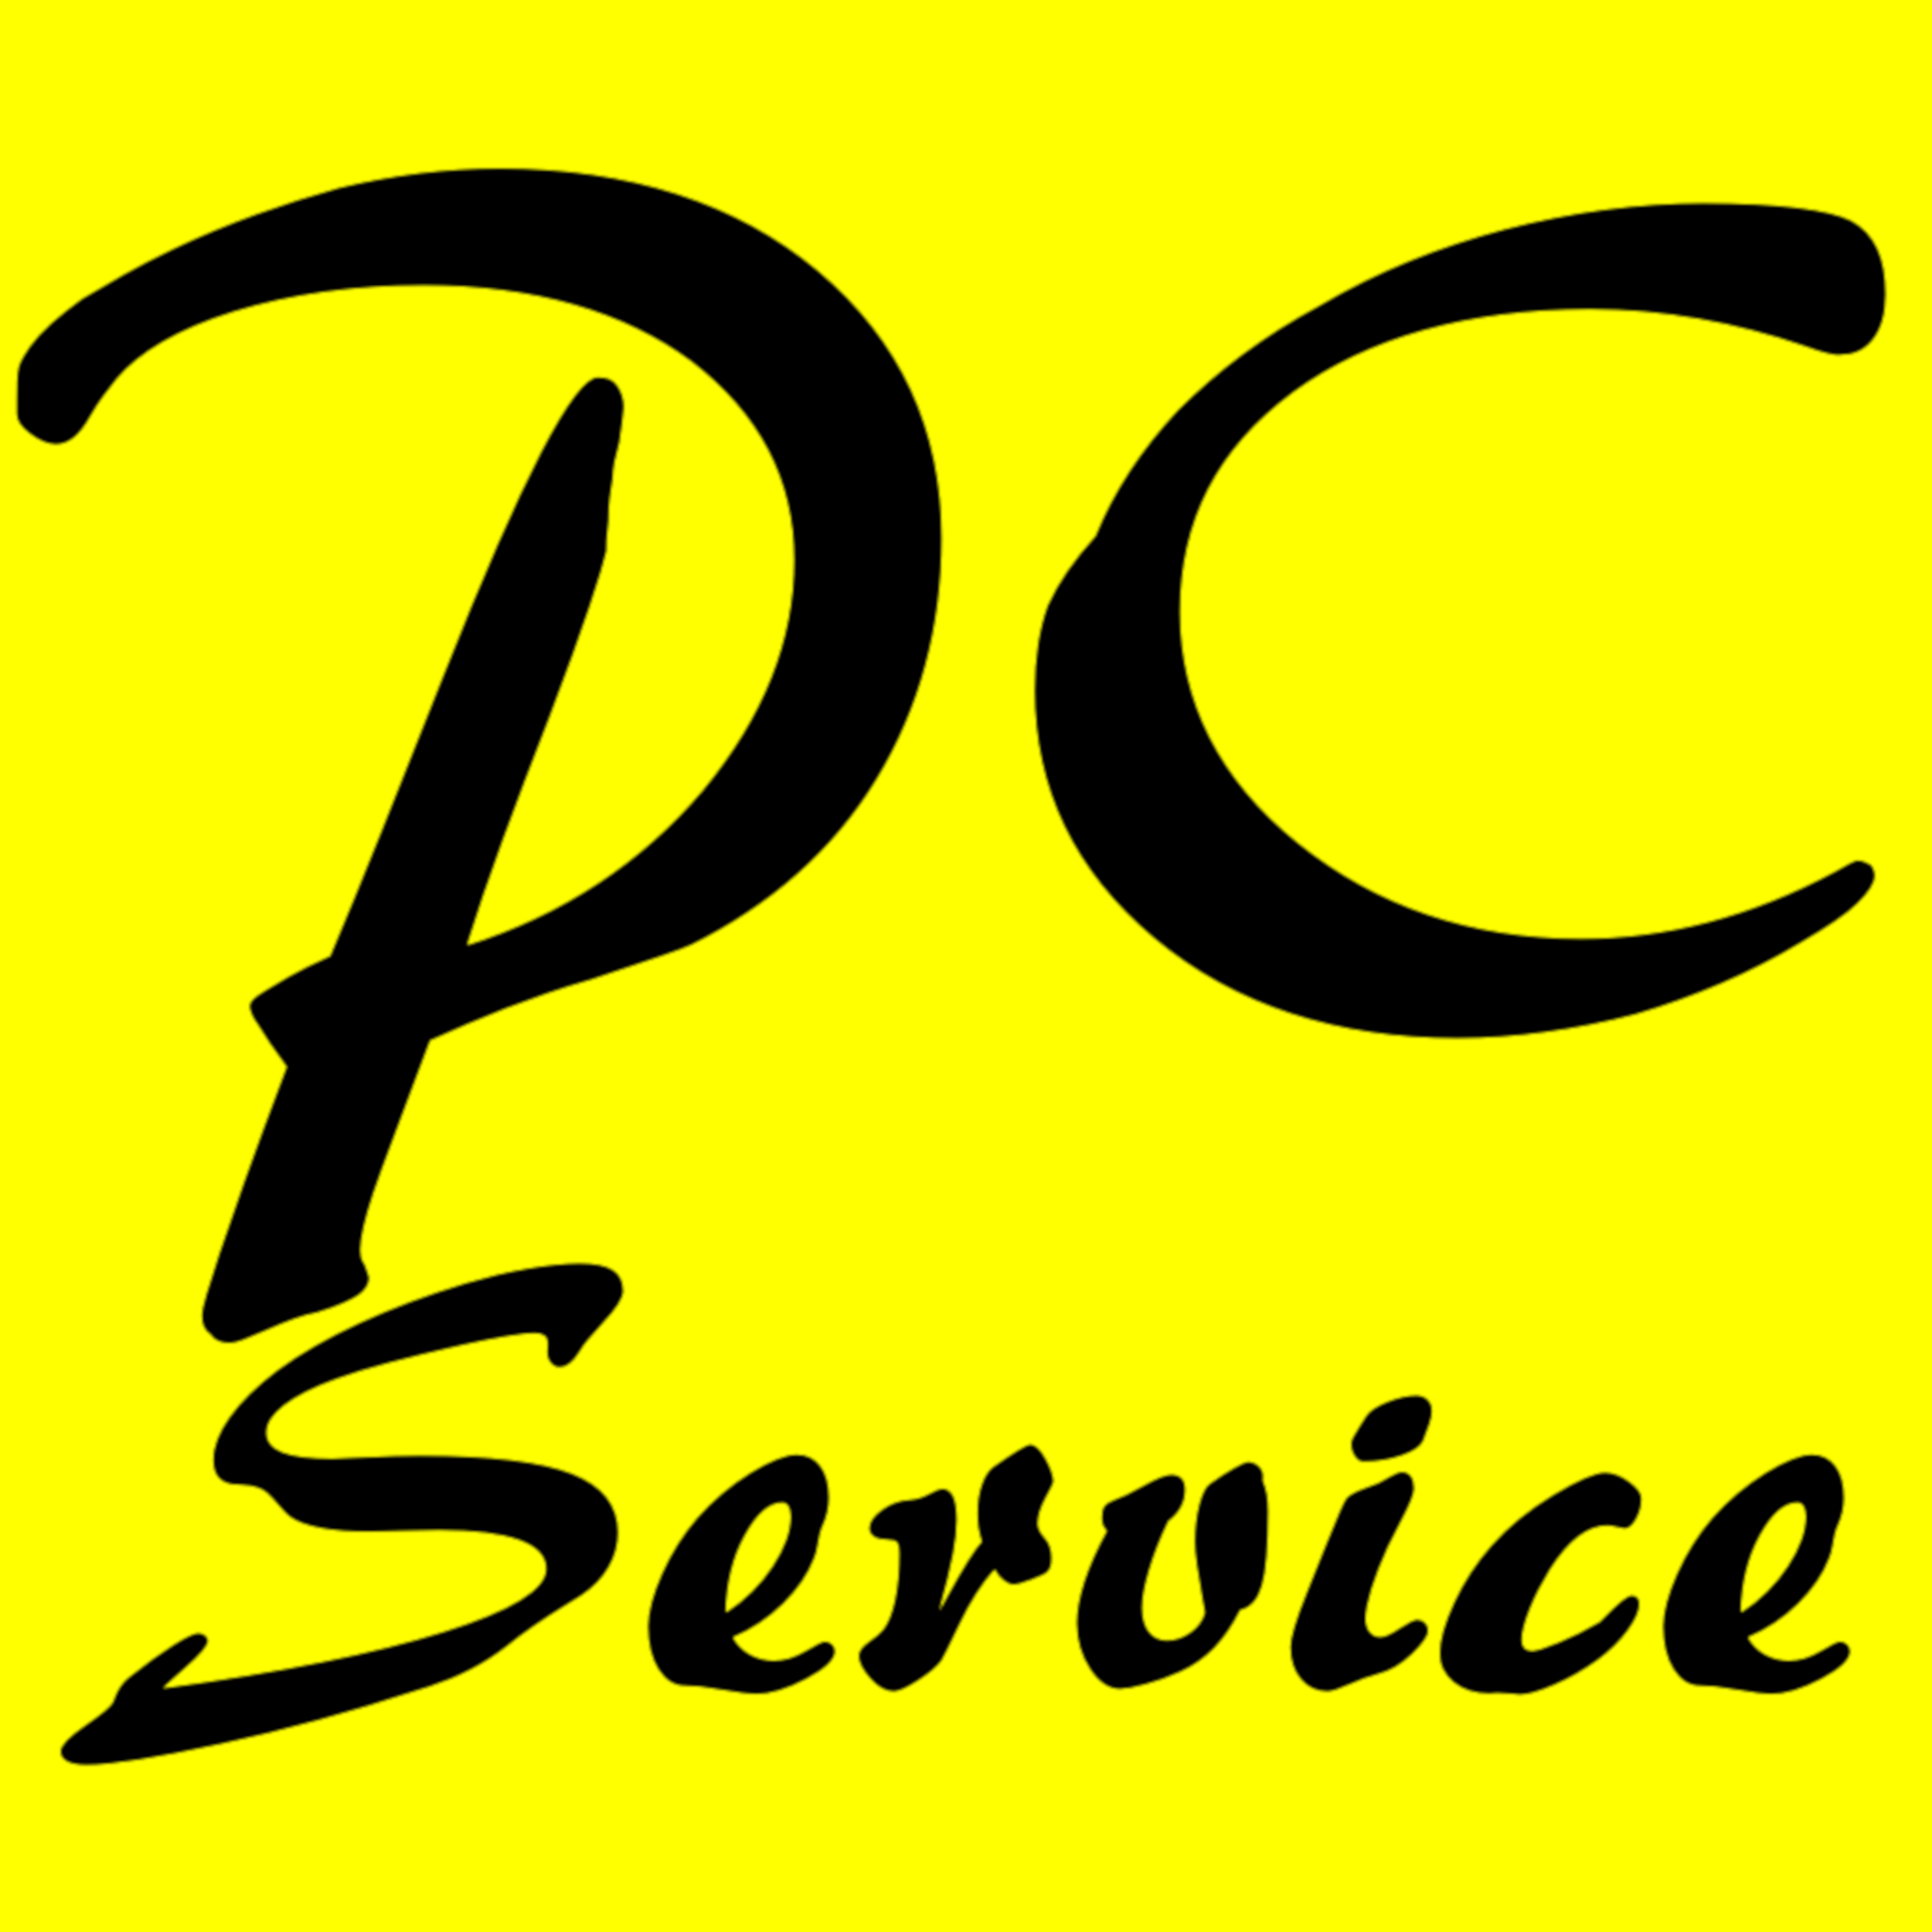 PC Service